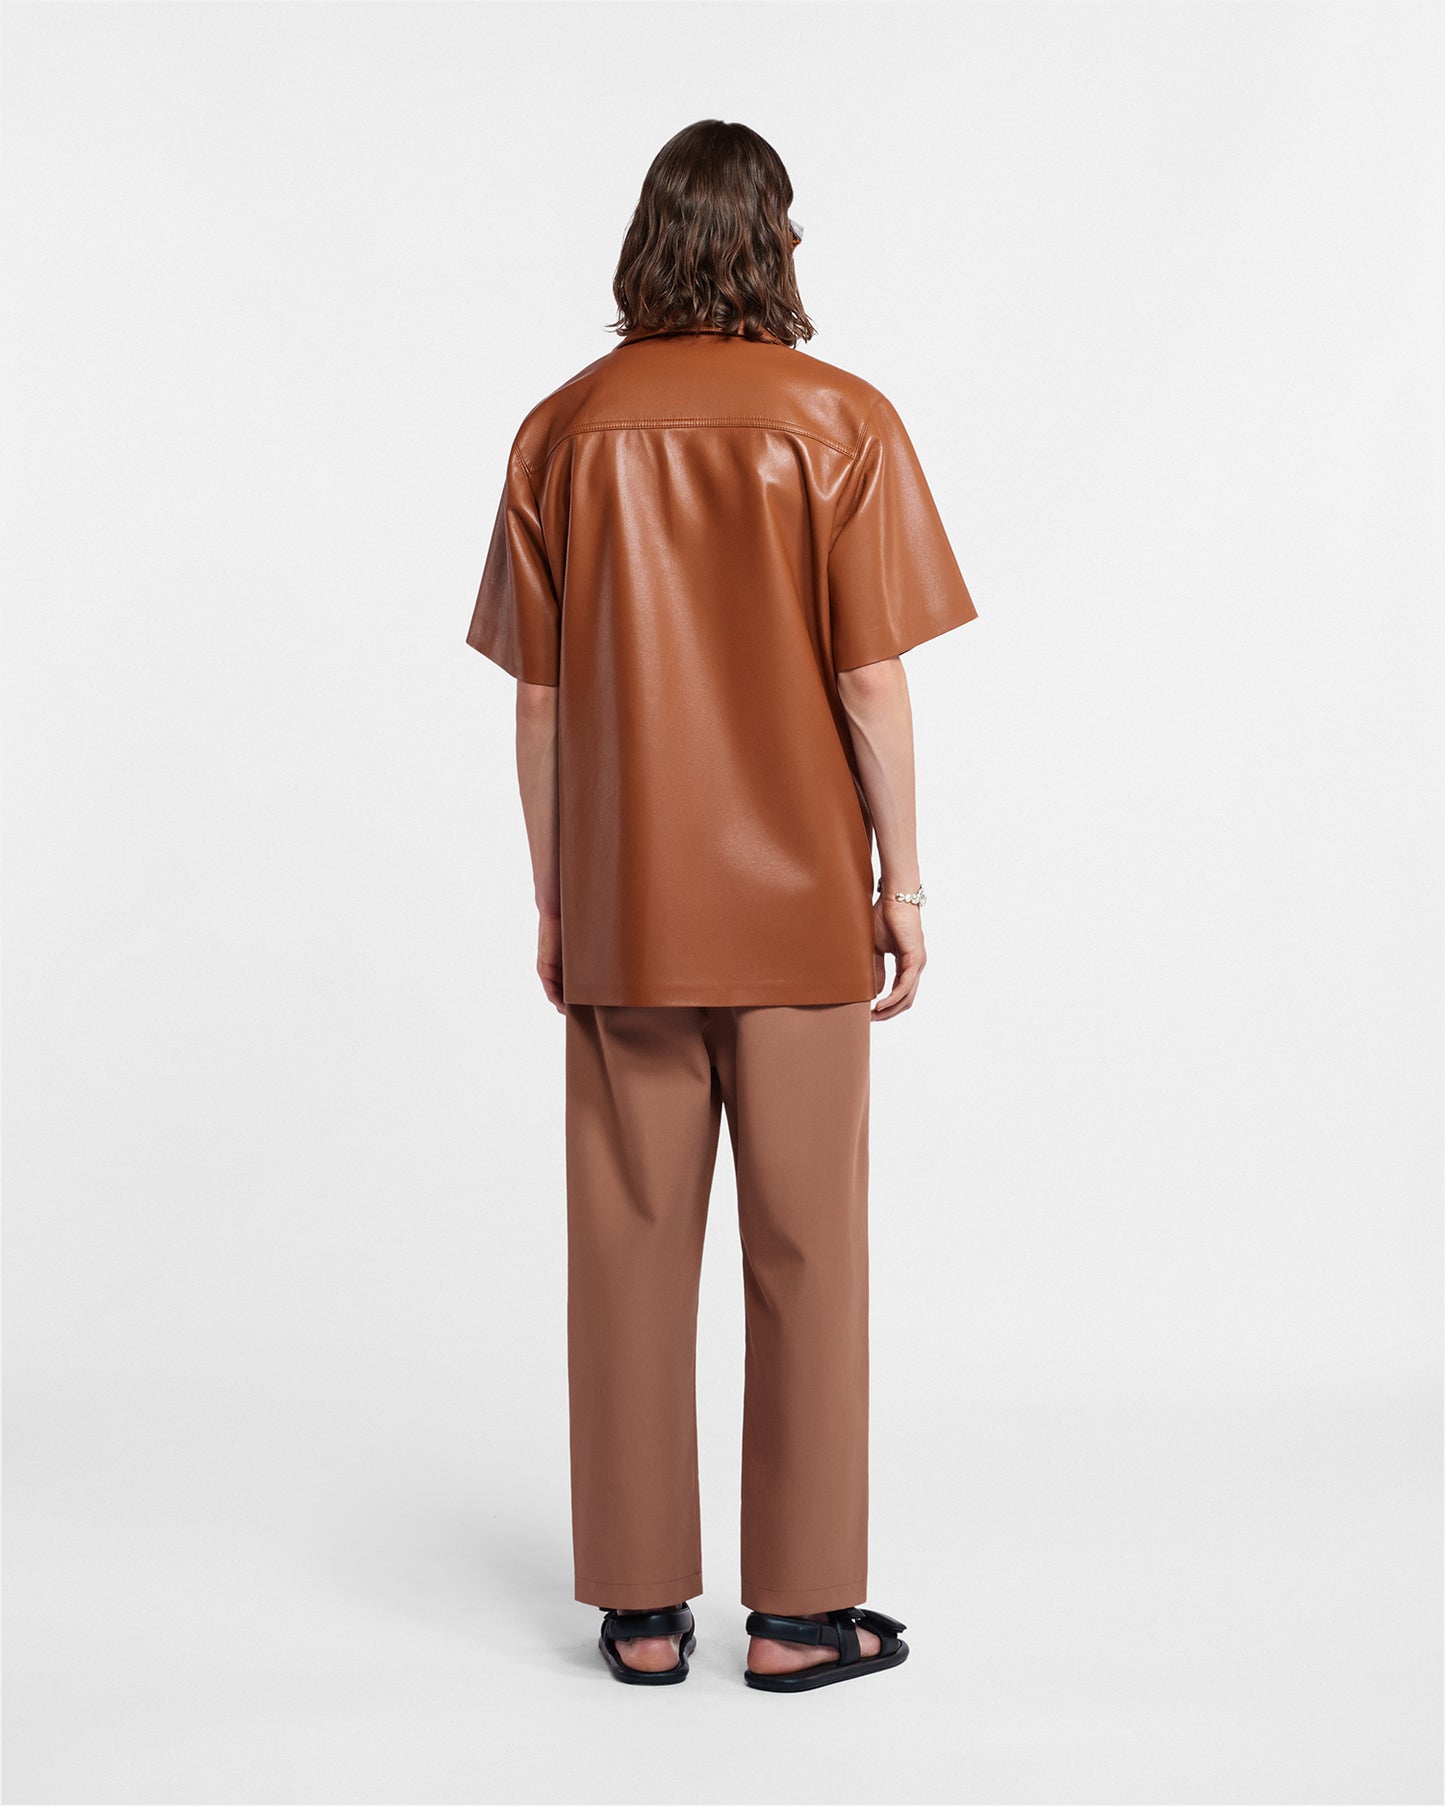 Carrick - Regenerated Leather Shirt - Tan